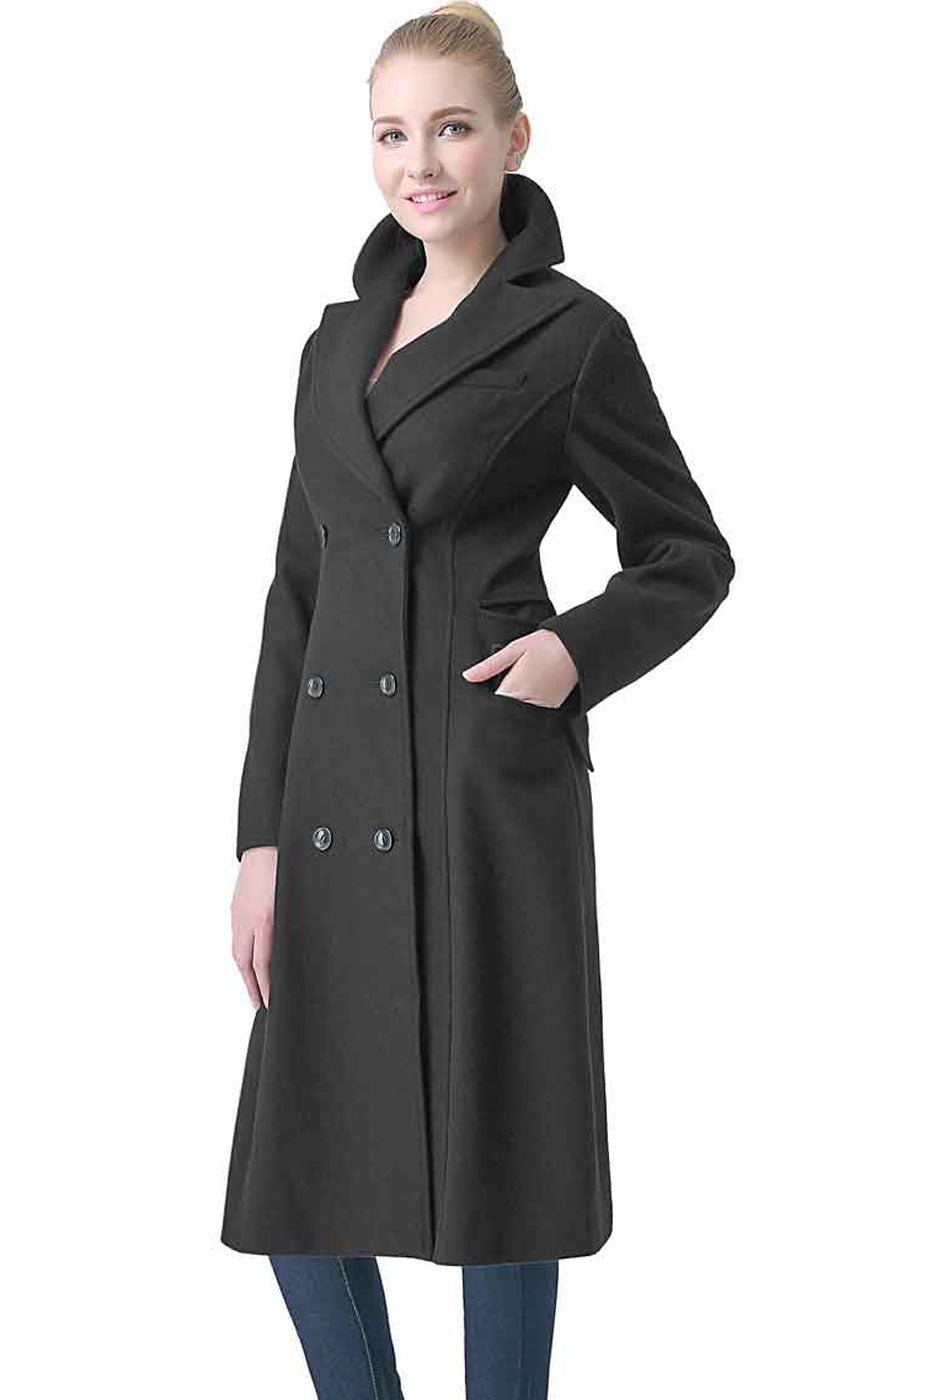 BGSD Women Romina Wool Long Walking Coat